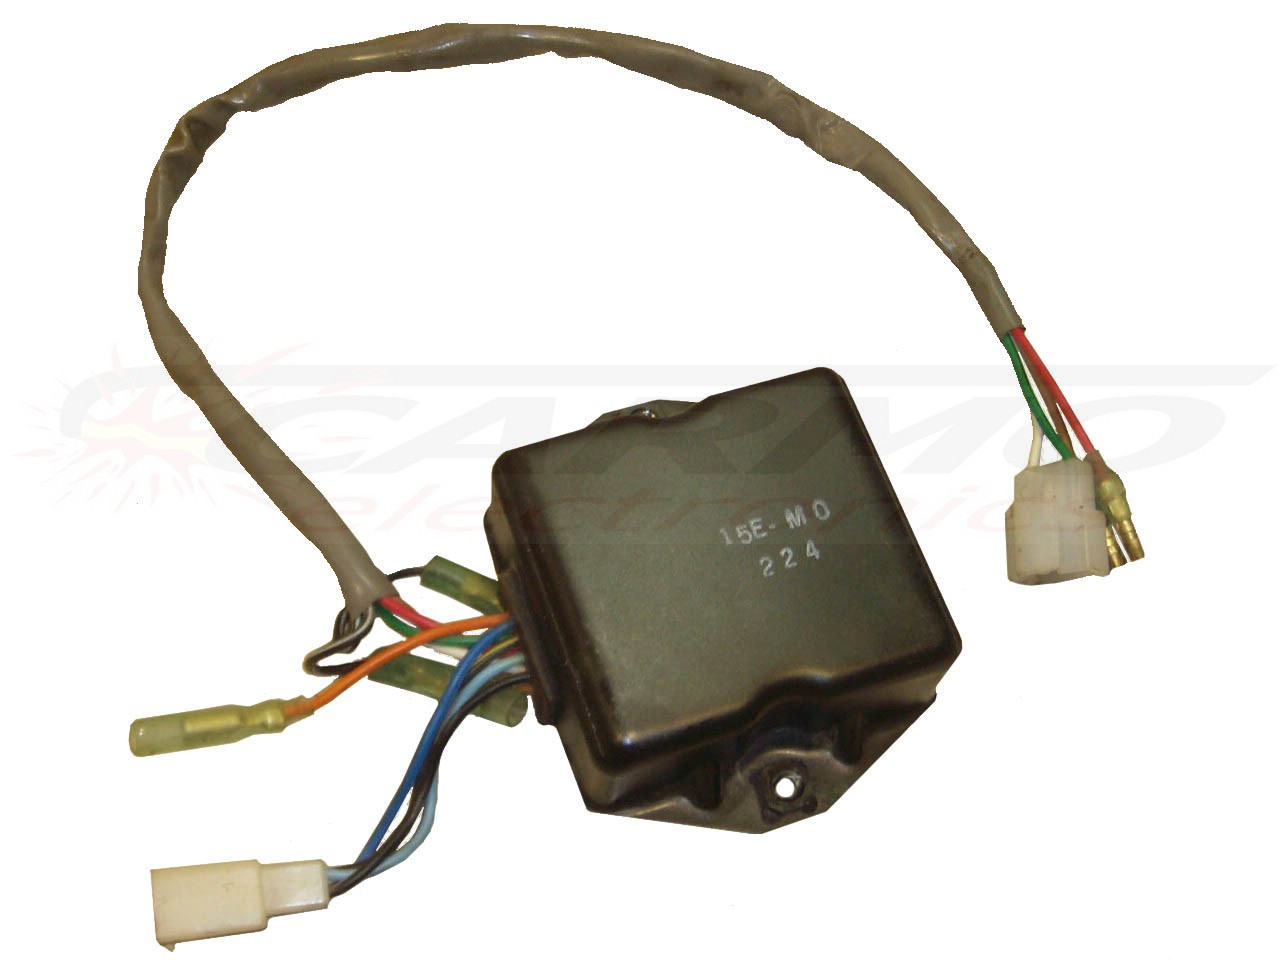 XT125 XT200 TCI CDI dispositif de commande boîte noire 1982-1987 (12V-MO, 15E-M0)